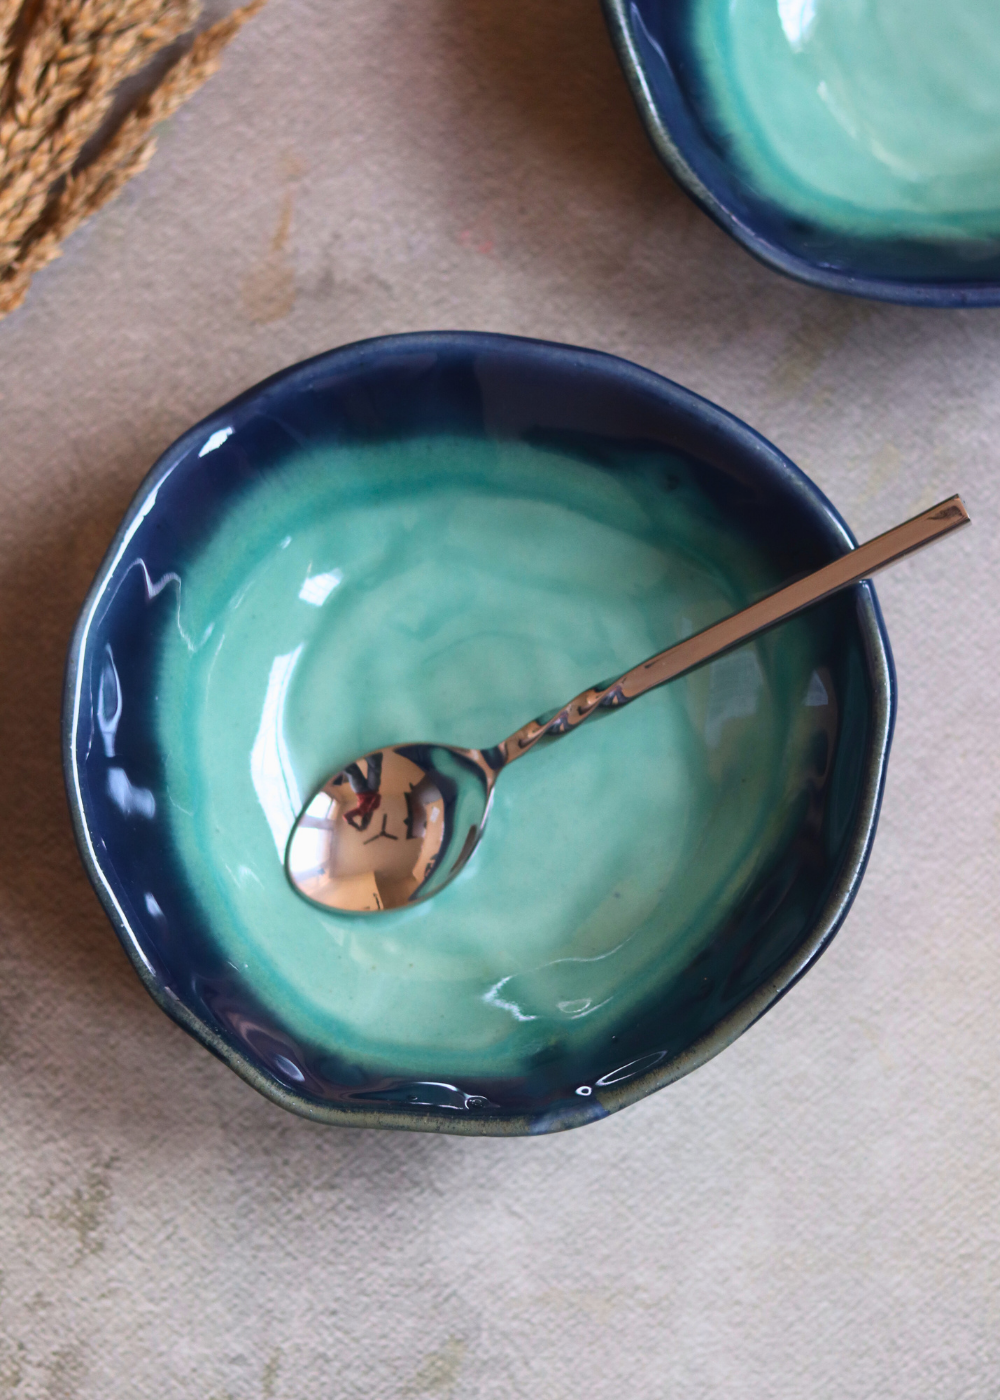 Handmade ceramic teal handmoulded bowl 